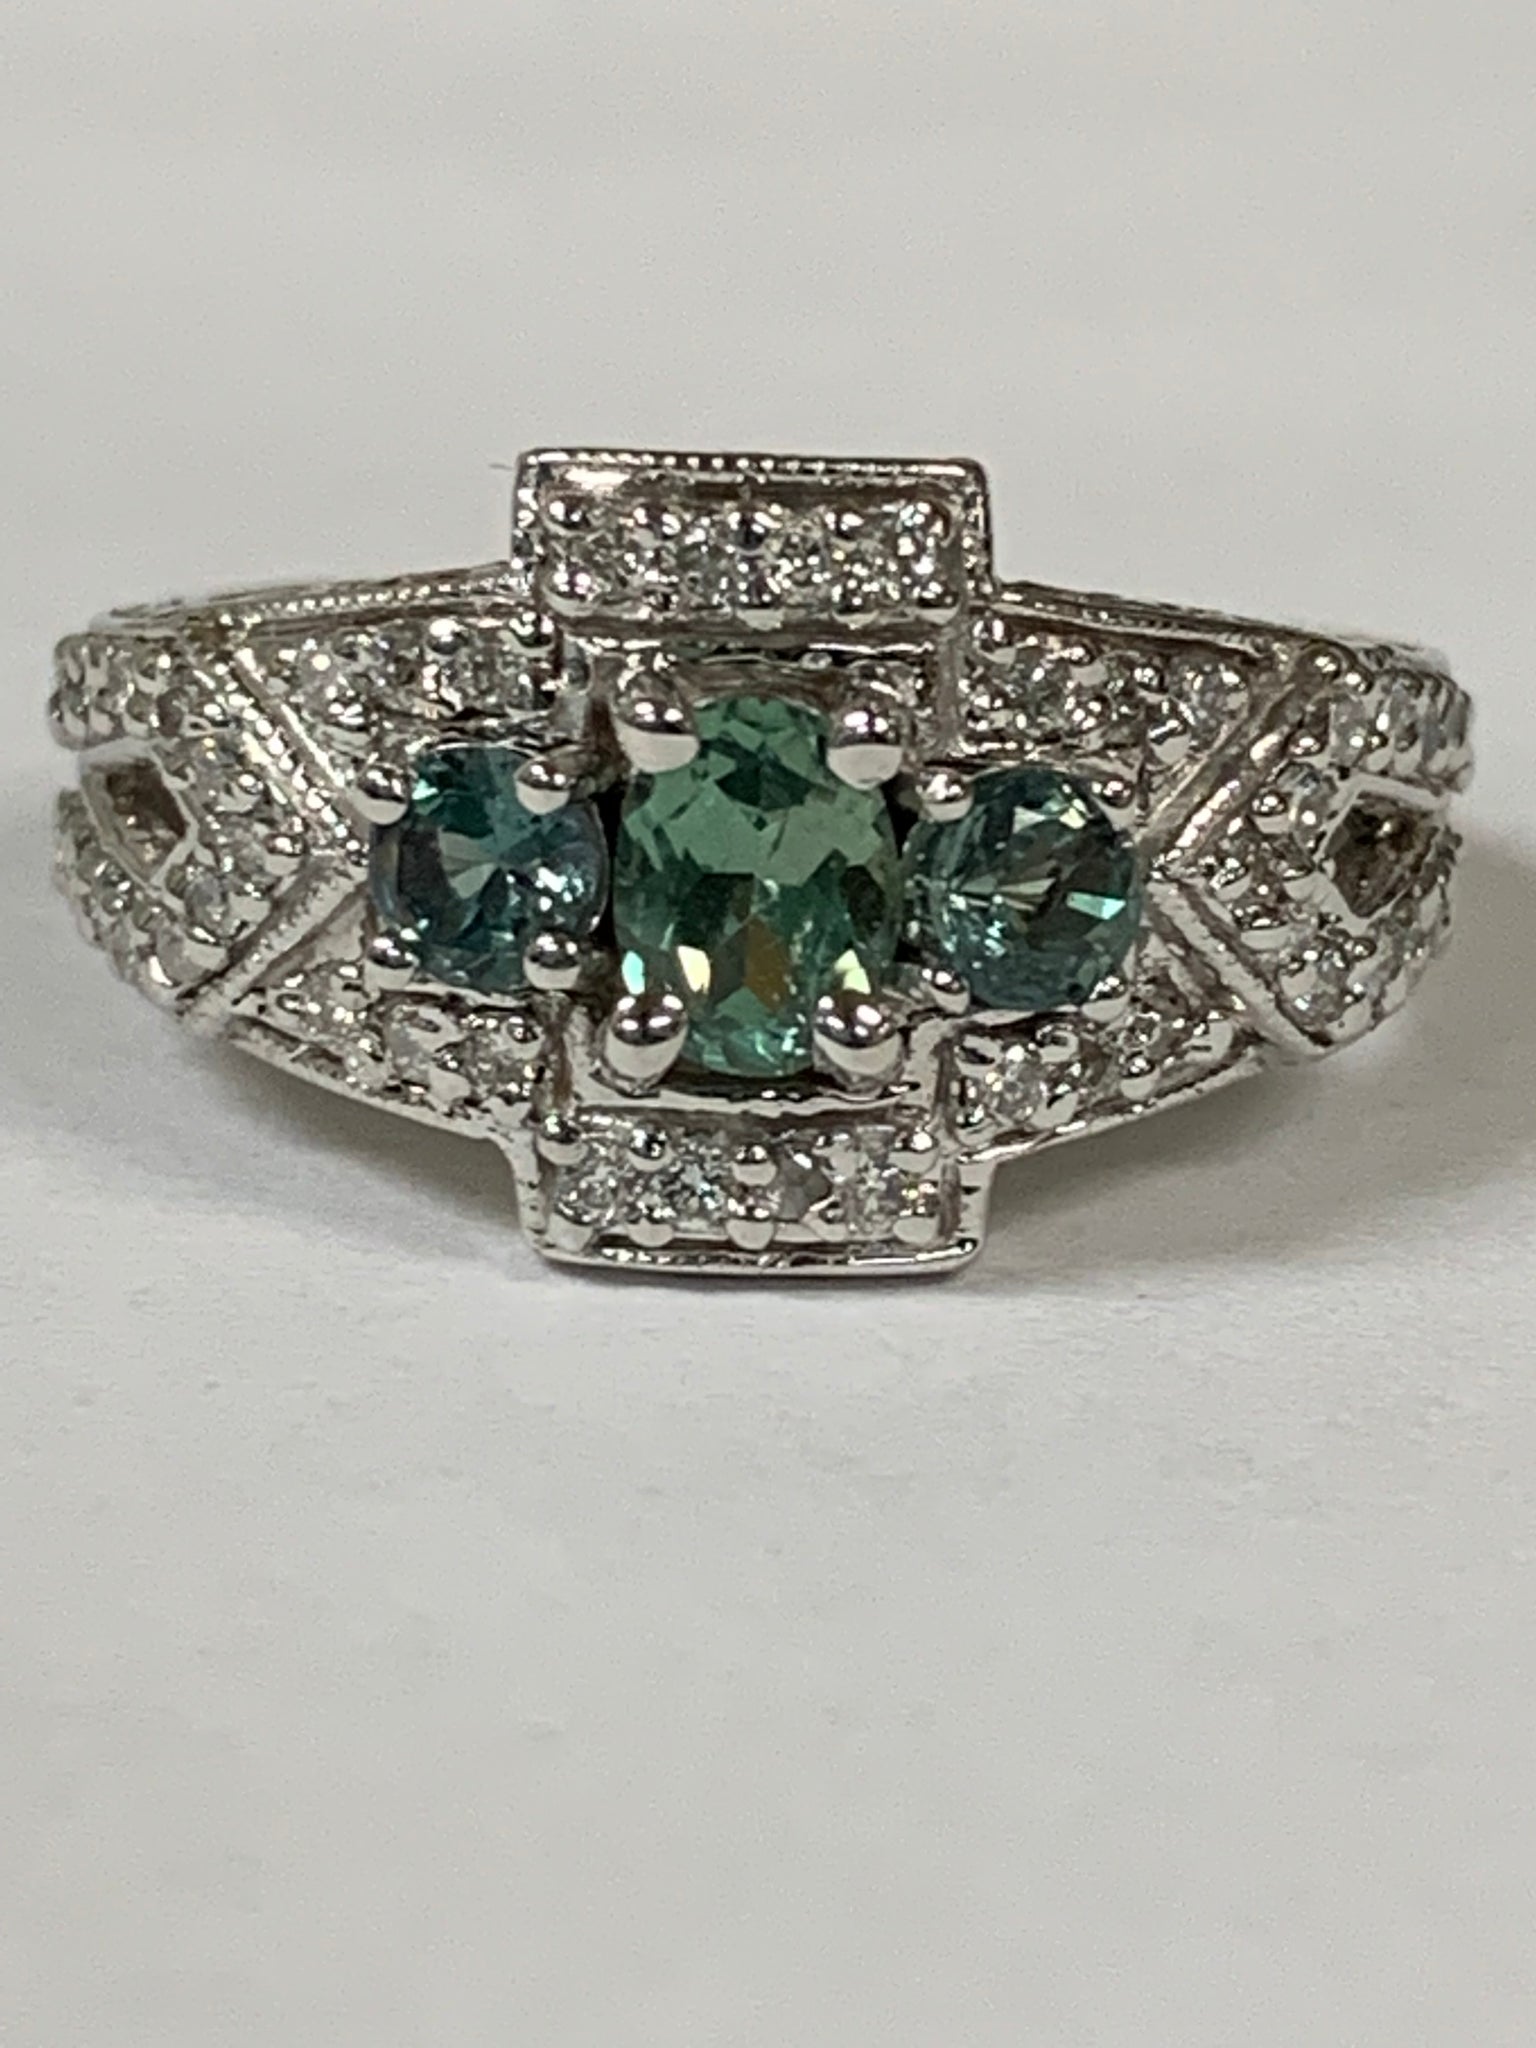 14k Green Sapphire & Diamond Ring